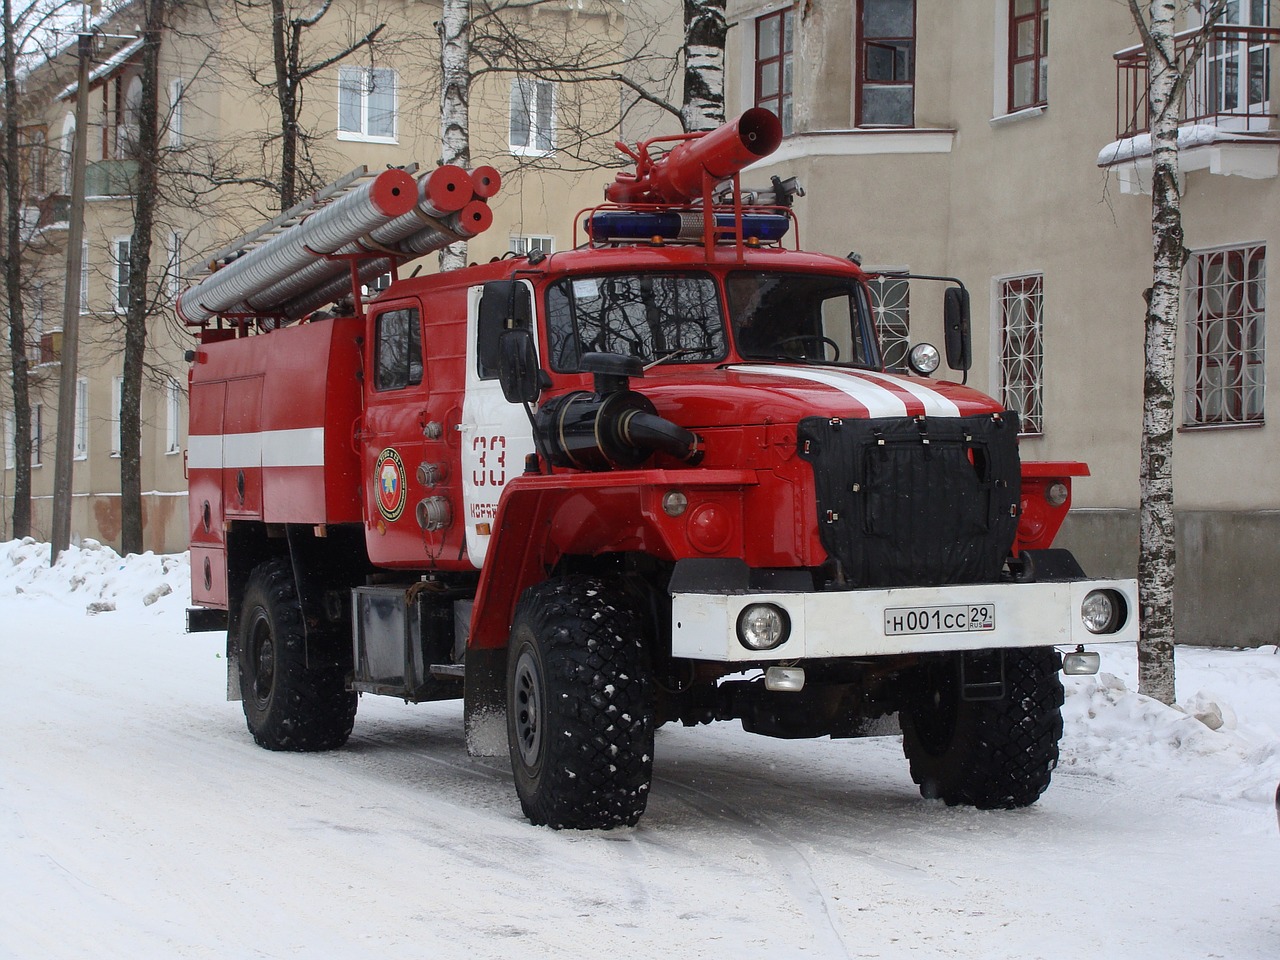 koryazhma firefighter truck free photo